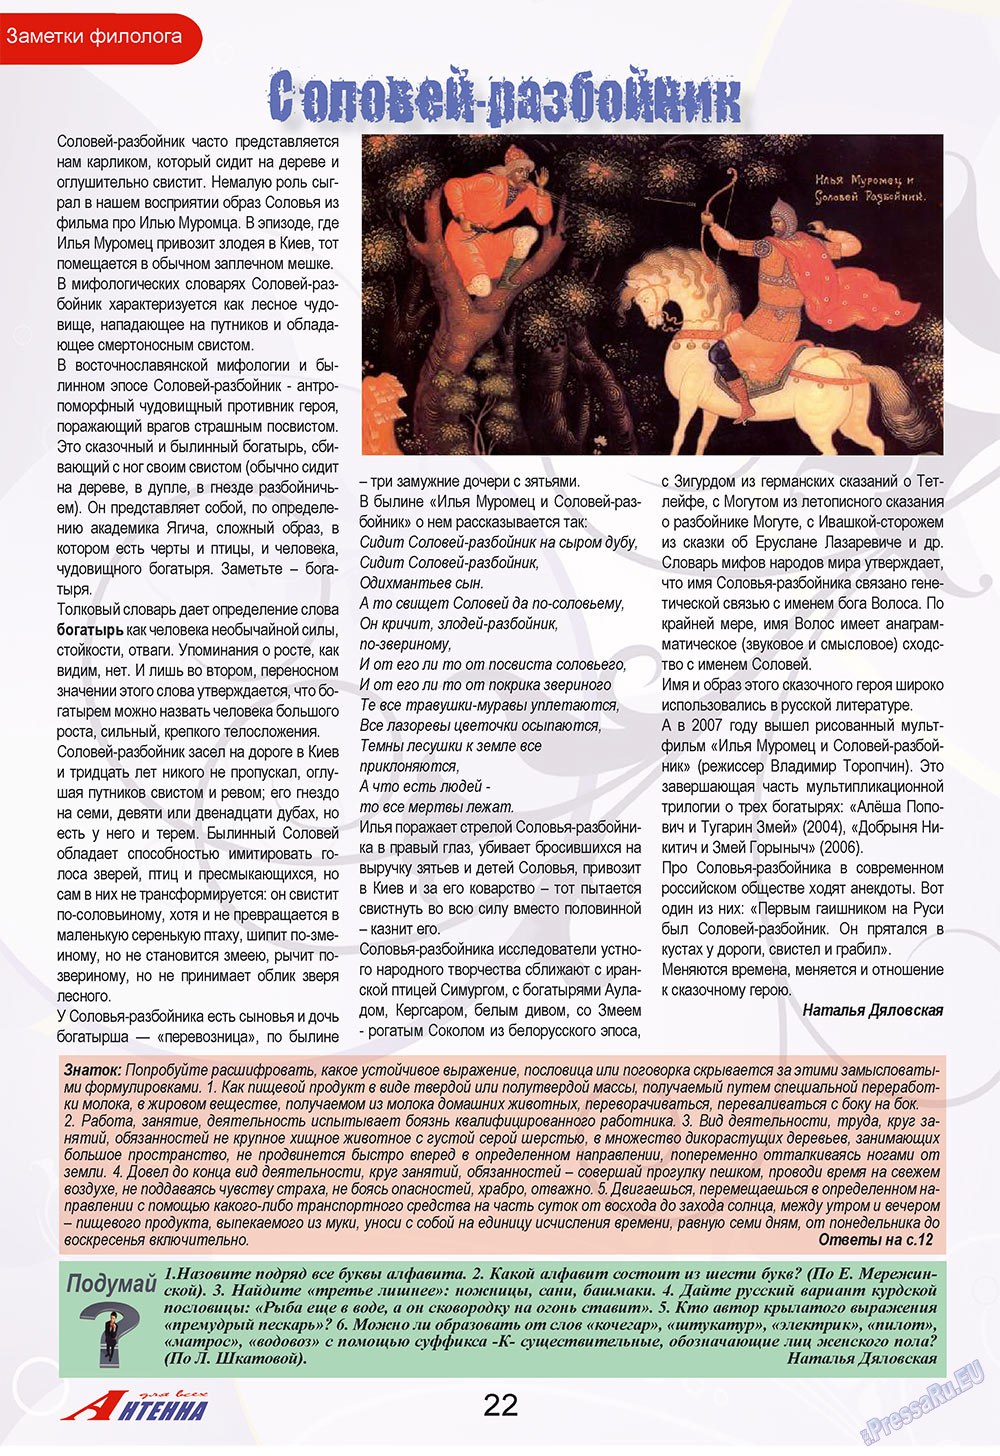 Антенна (журнал). 2009 год, номер 8, стр. 22